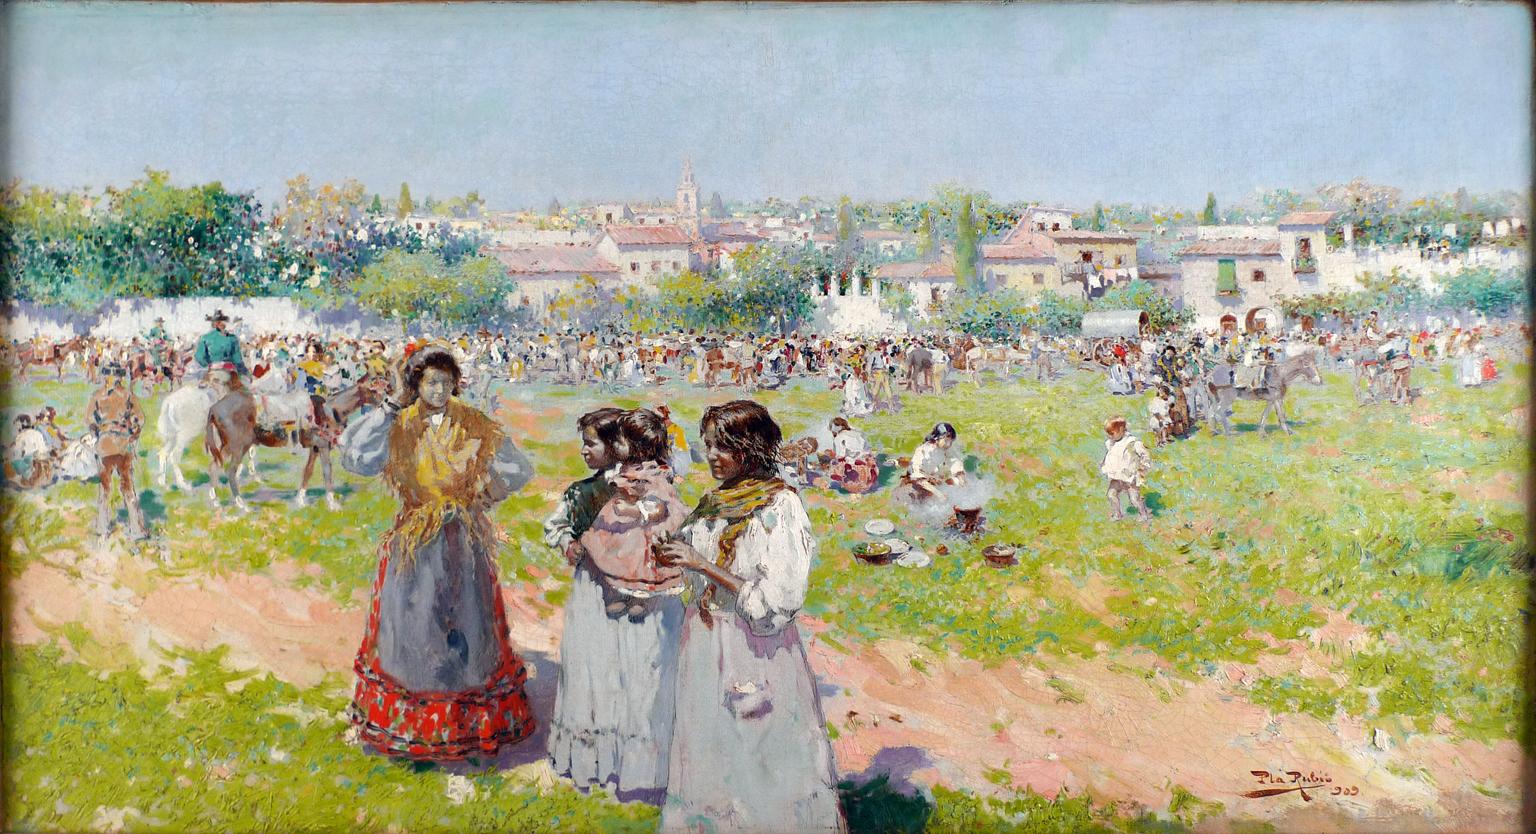 "At the Annual Fair", an early 20th Century oil on canvas by Alberto Plá Rubio